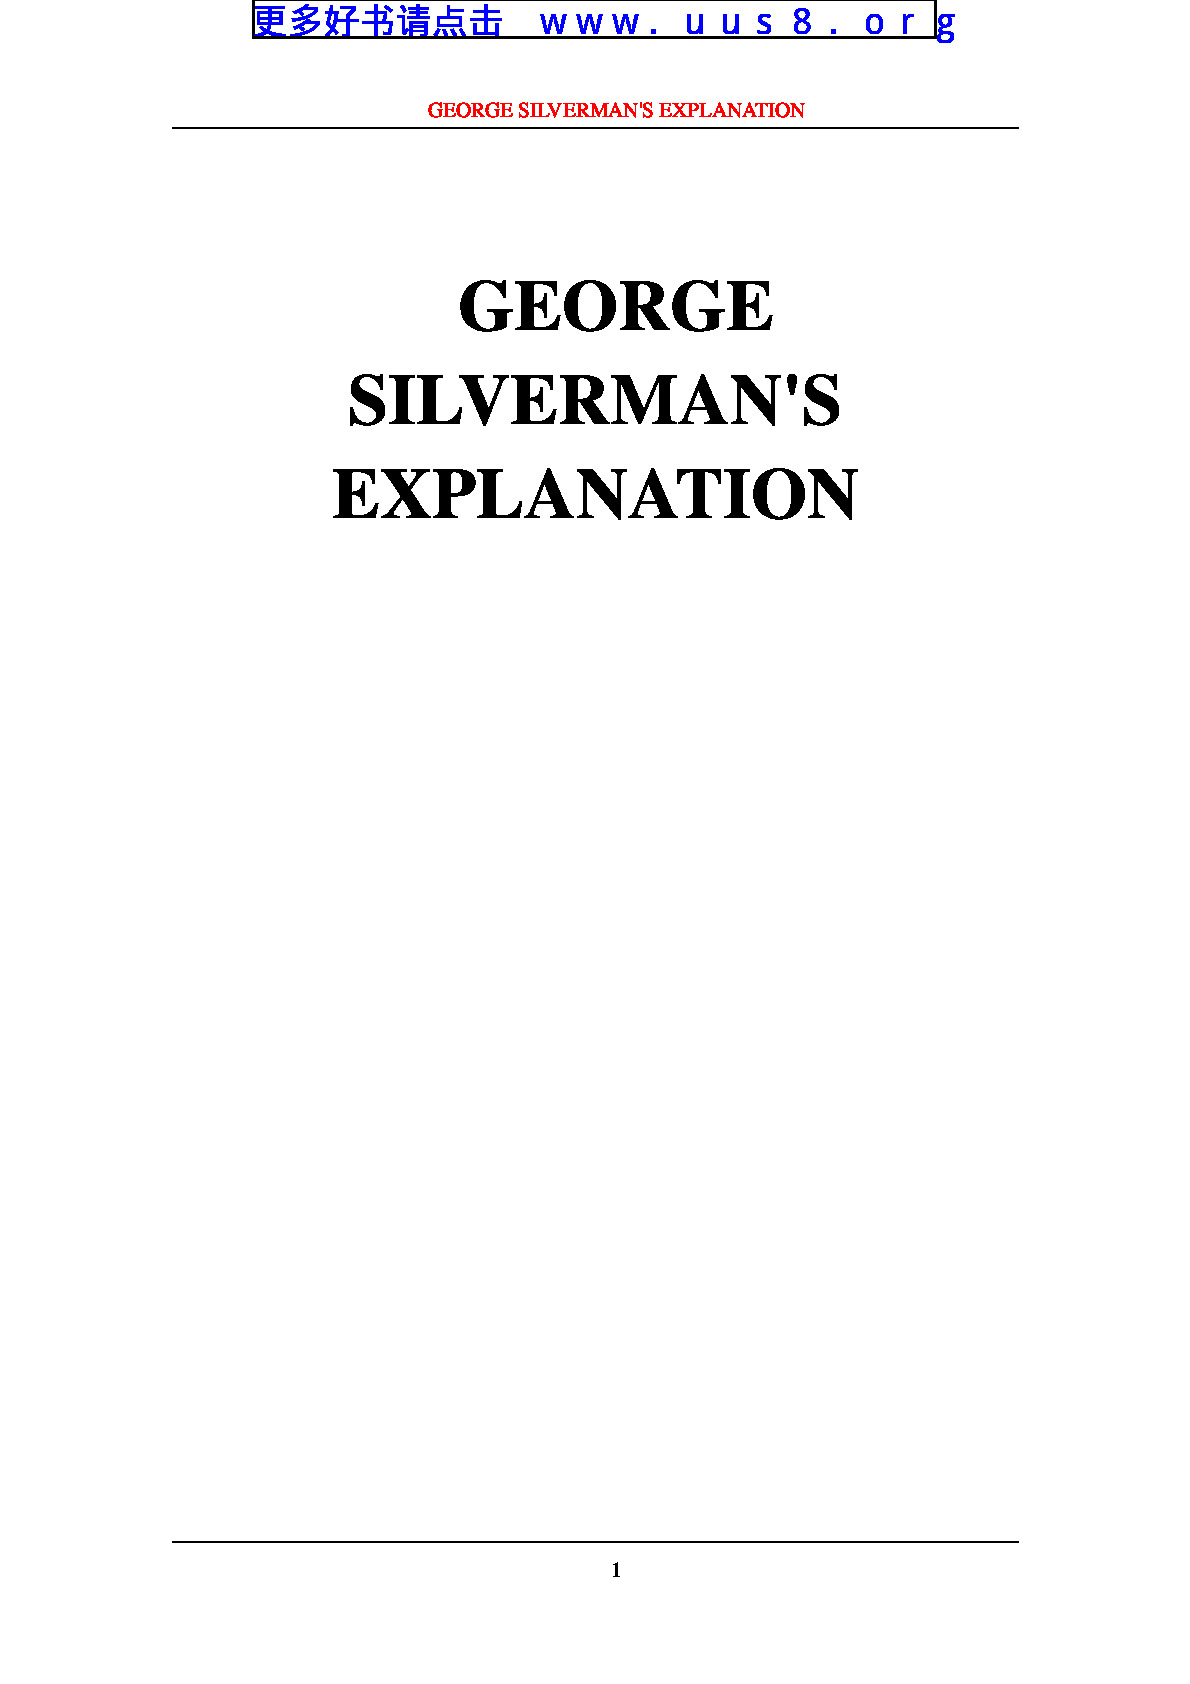 GEORGE_SILVERMAN’S_EXPLANATION(乔治斯尔曼的理由)